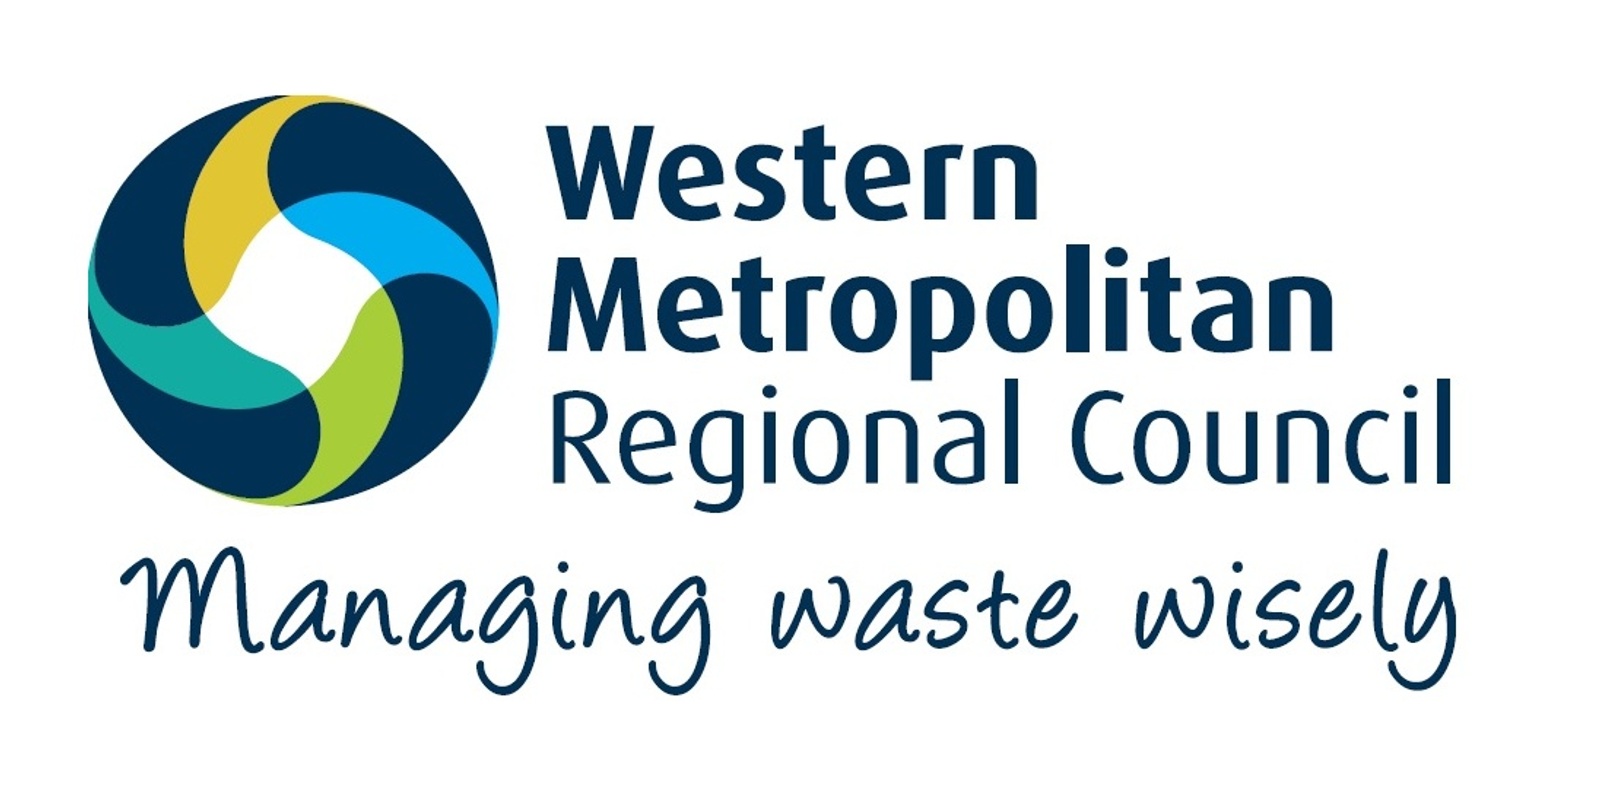 Western Metropolitan Regional Council's banner